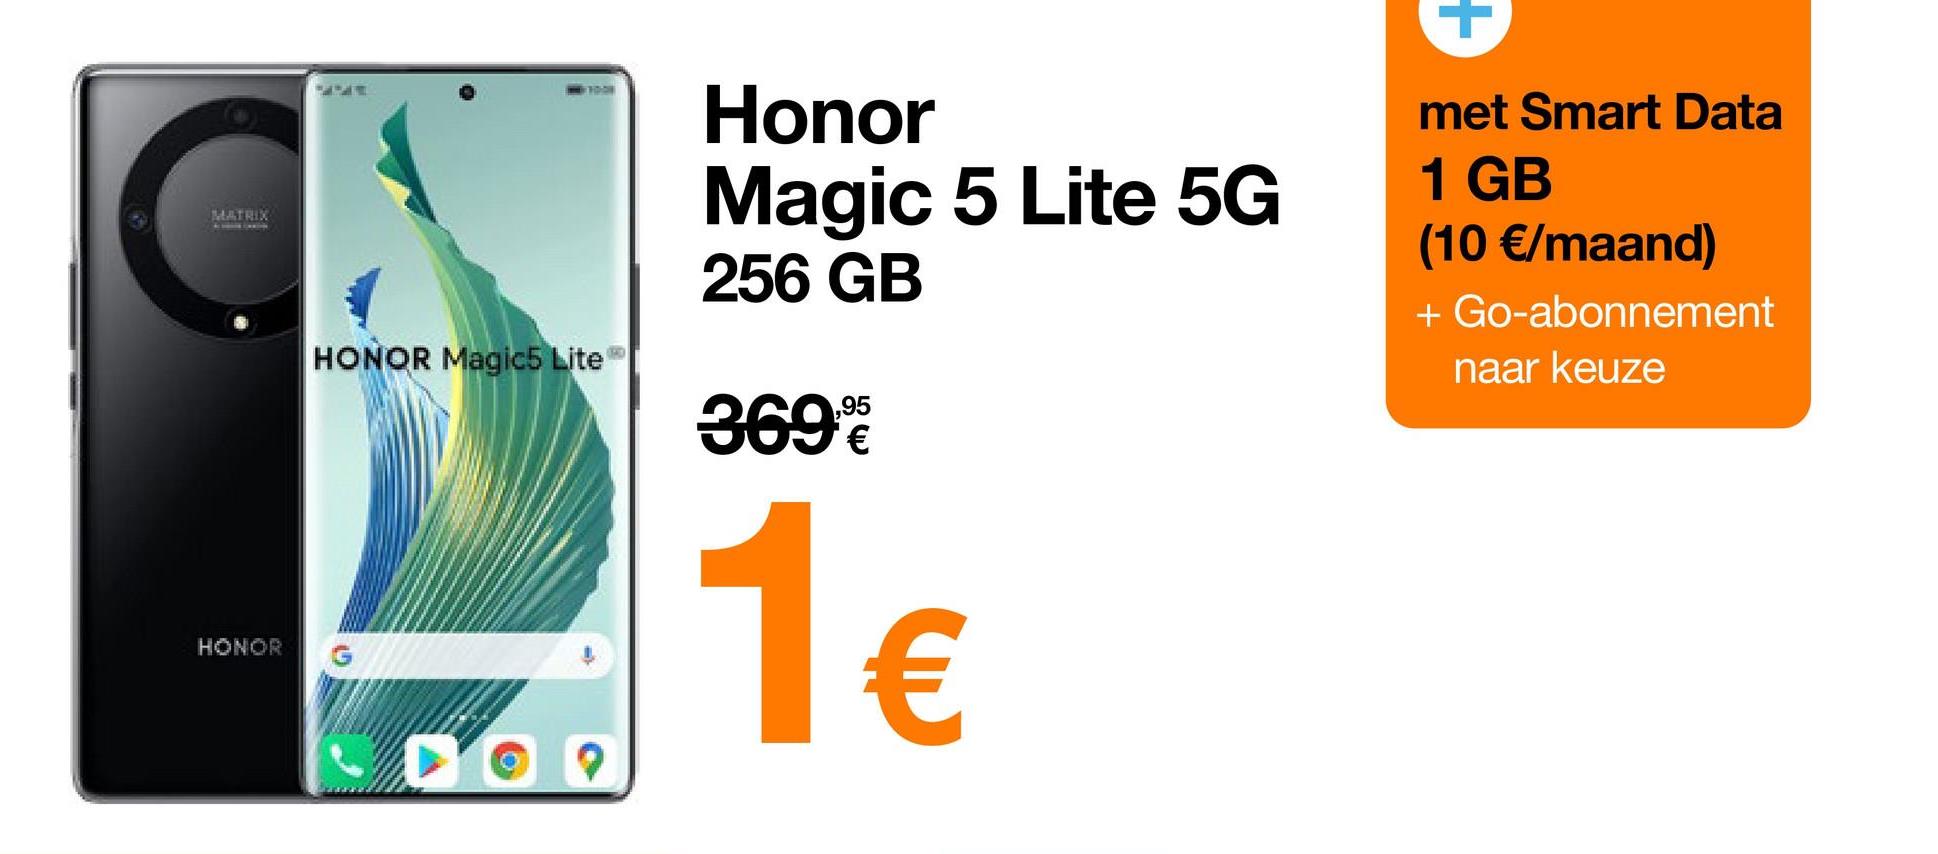 MATRIX
AT CARD
HONOR
1000
HONOR Magic5 Lite
DOO
Honor
Magic 5 Lite 5G
256 GB
3699
1€
met Smart Data
1 GB
(10 €/maand)
+ Go-abonnement
naar keuze